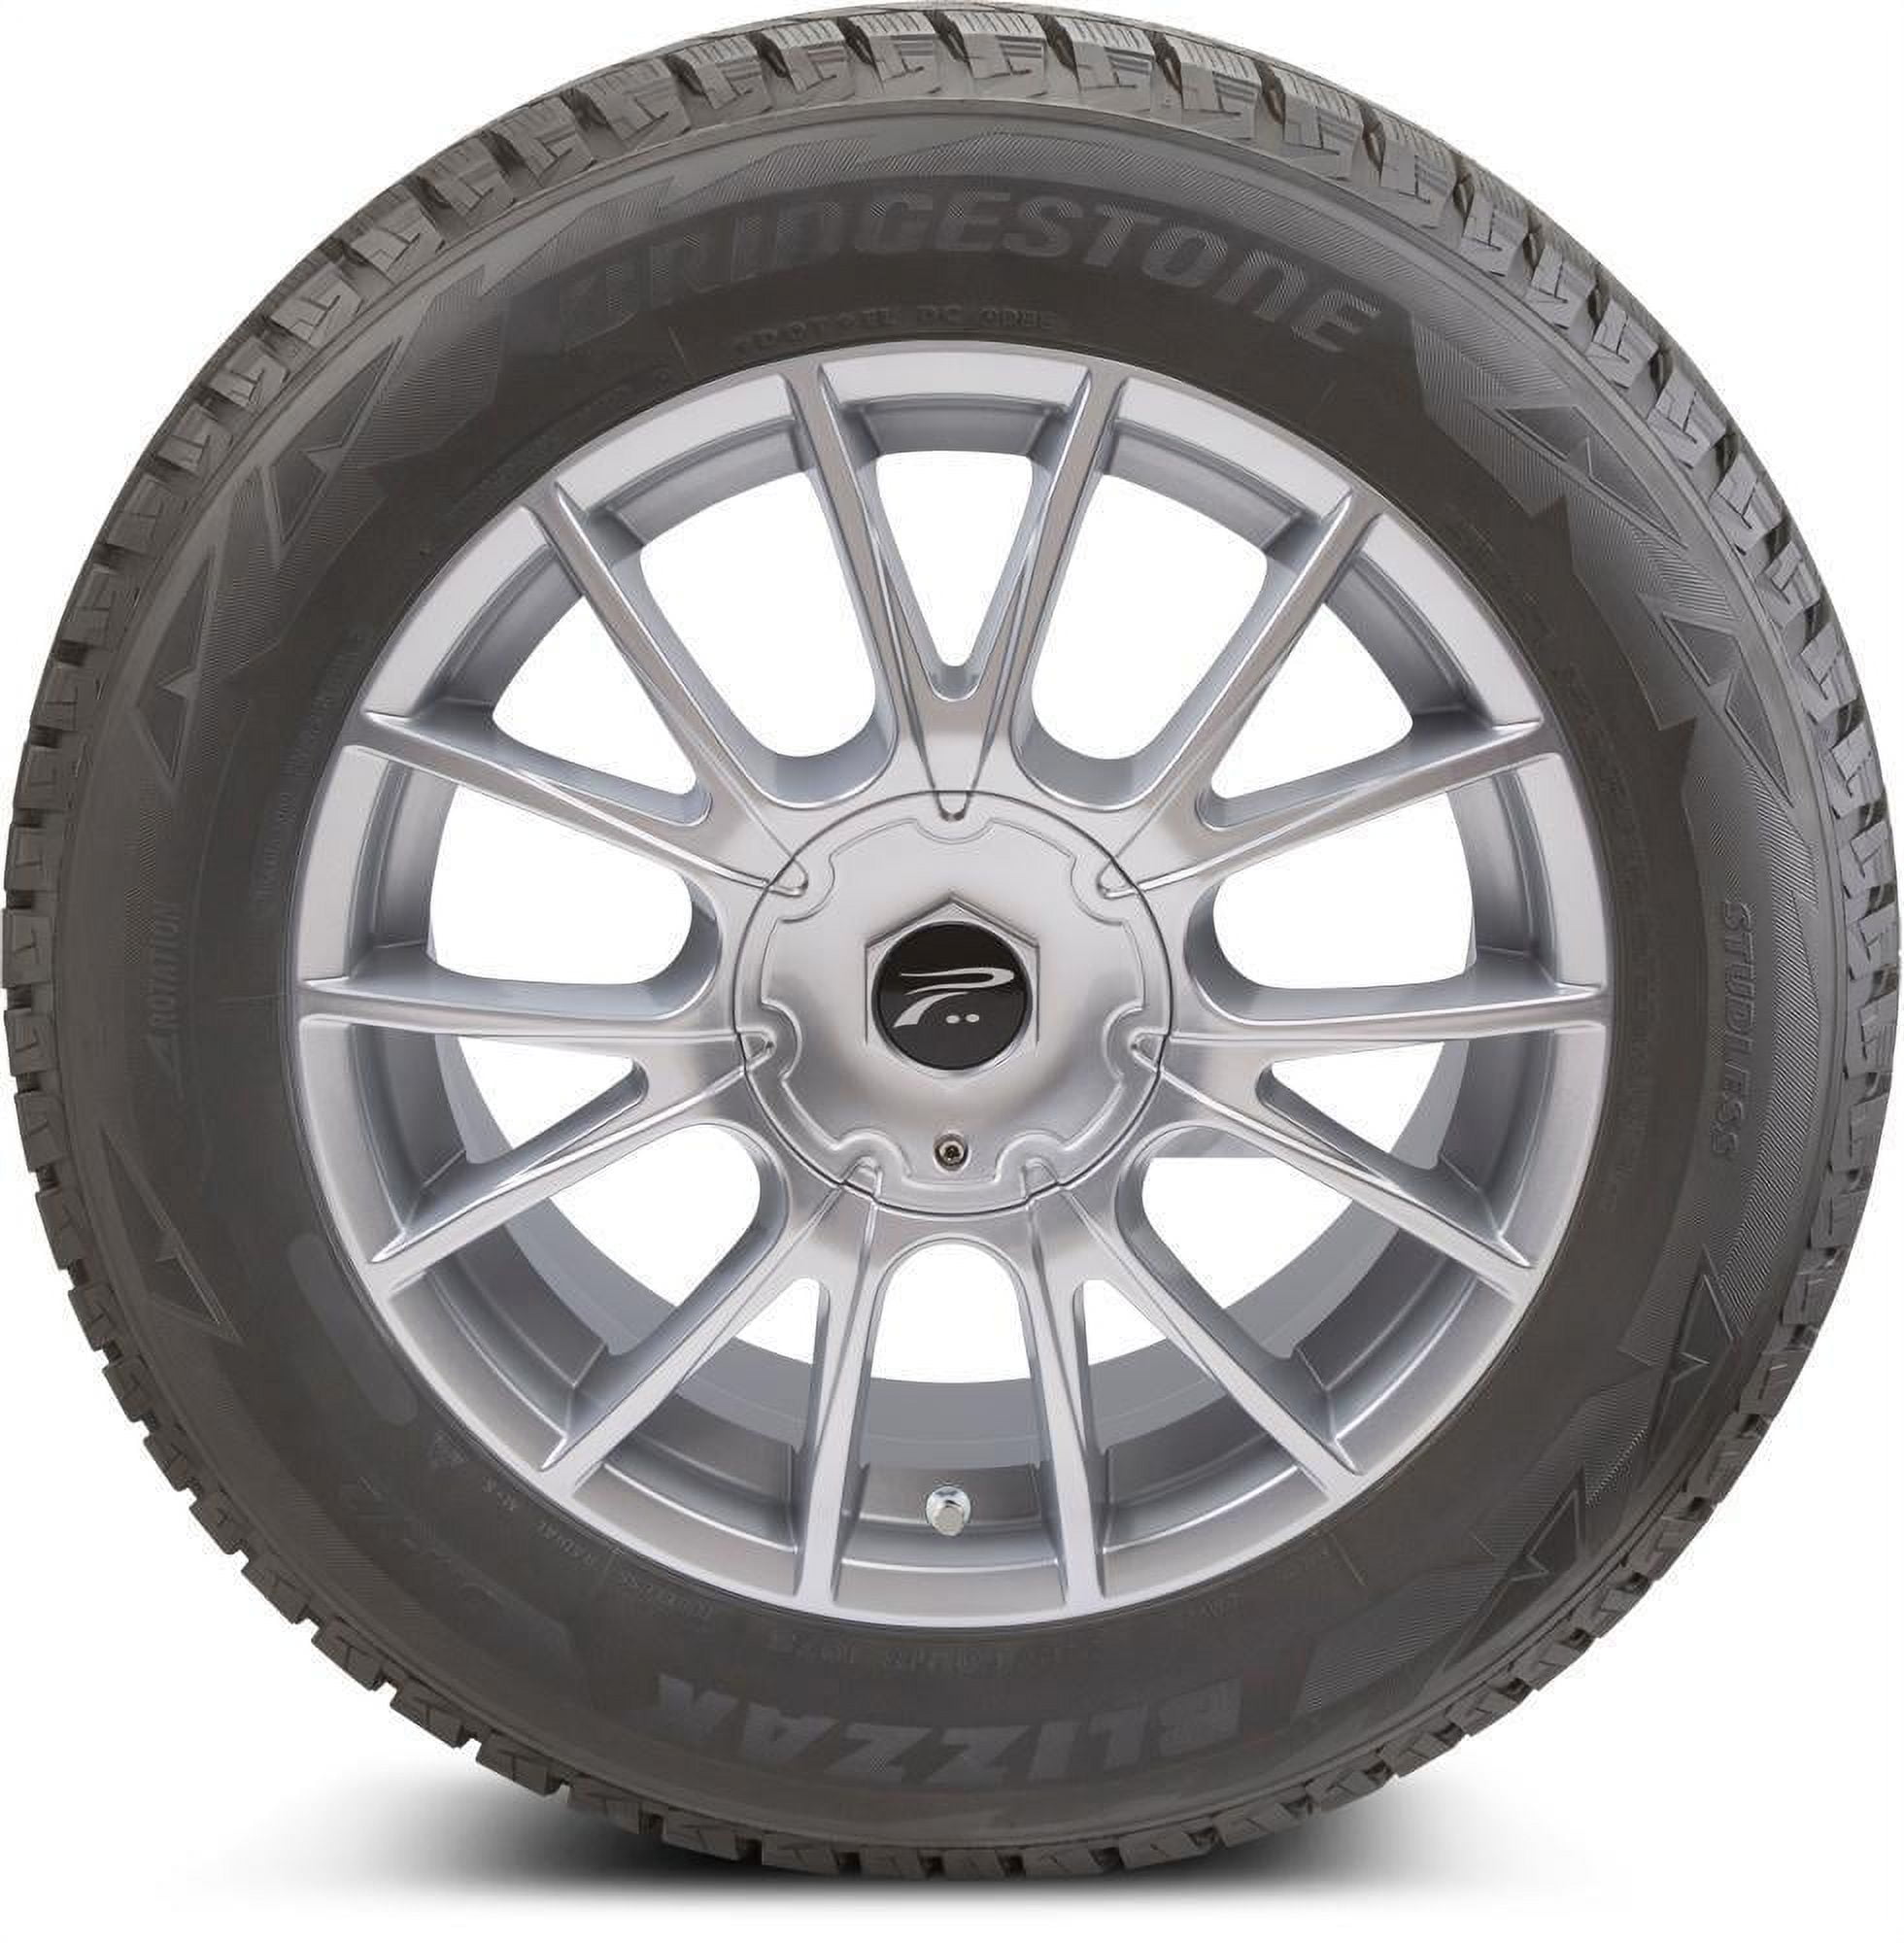 Bridgestone blizzak dm-v2 LT285/60R18 winter tire 116R bsw